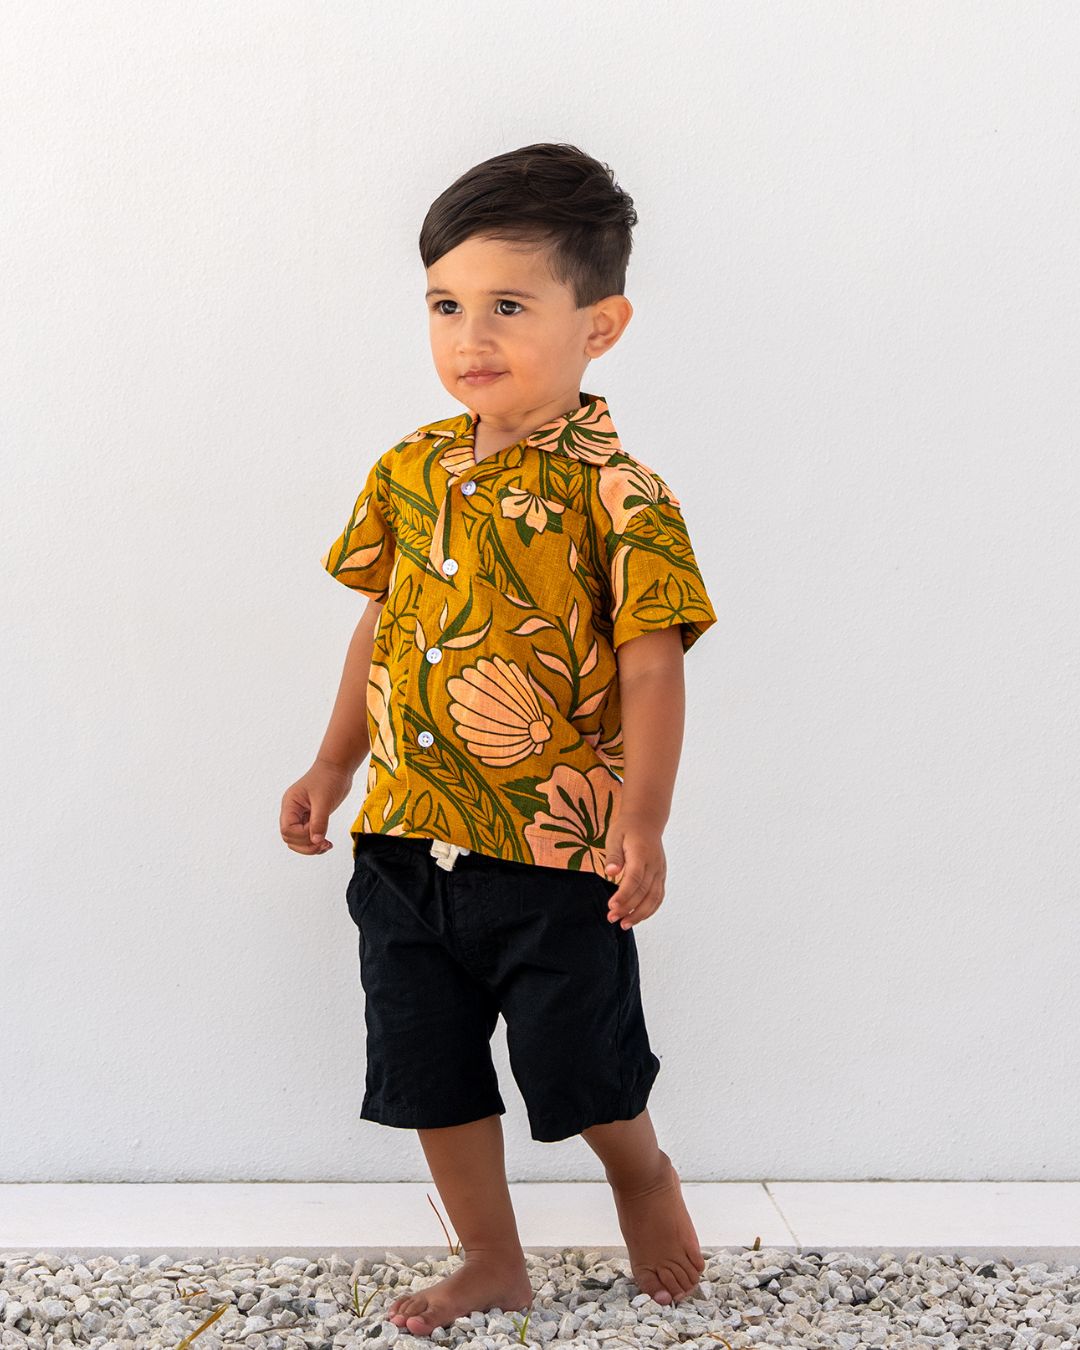 Kanoa Baby Short Sleeve Island Shirt - Island Vines Gold